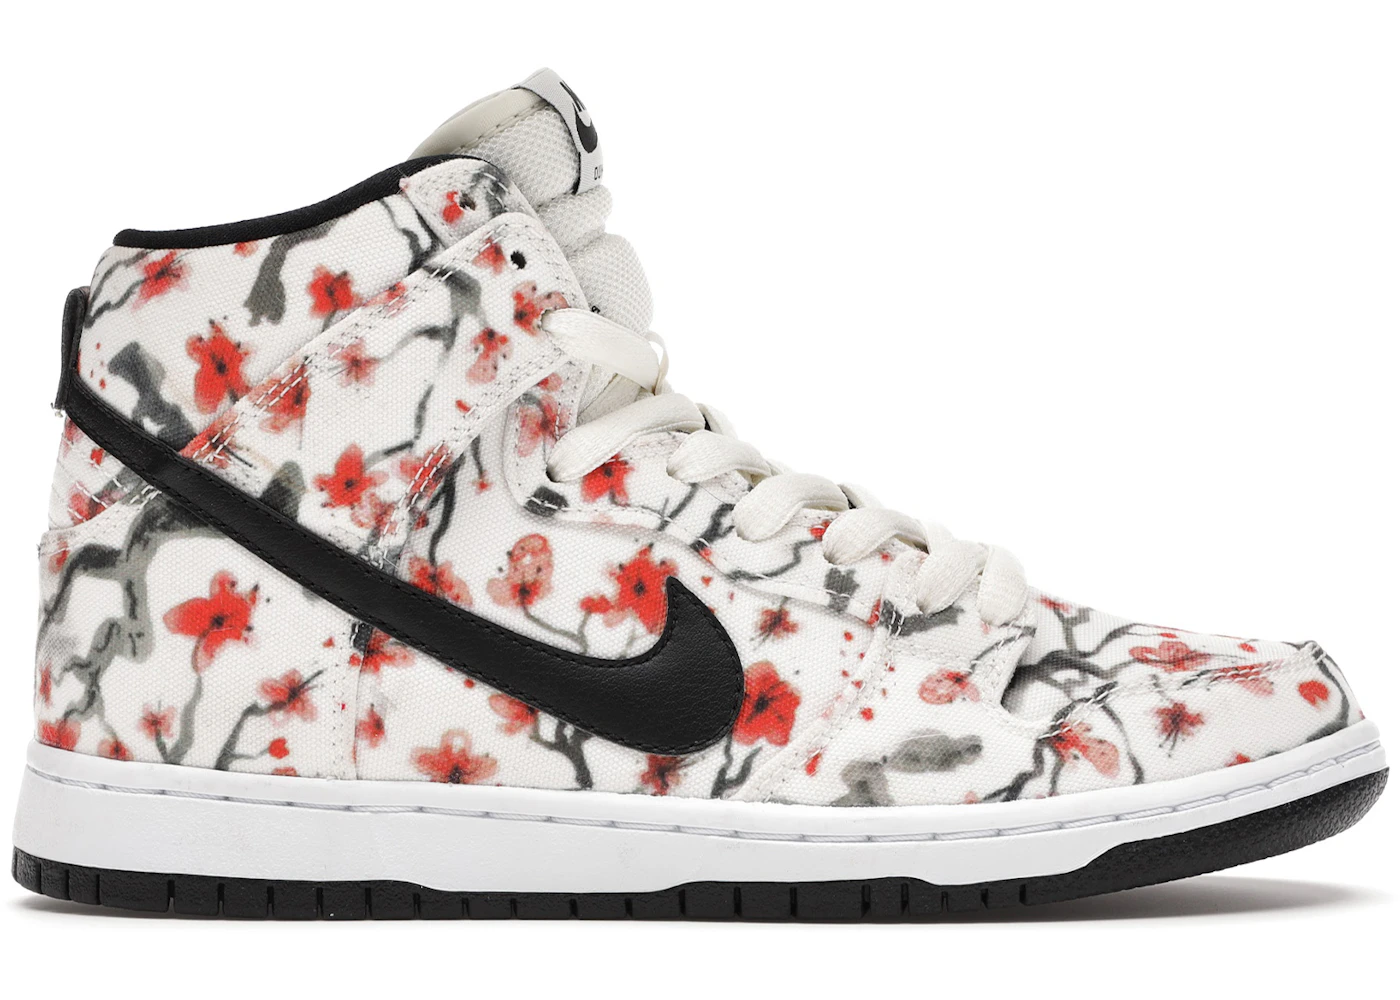 Nike SB Dunk High Cherry Blossom - 305050-106